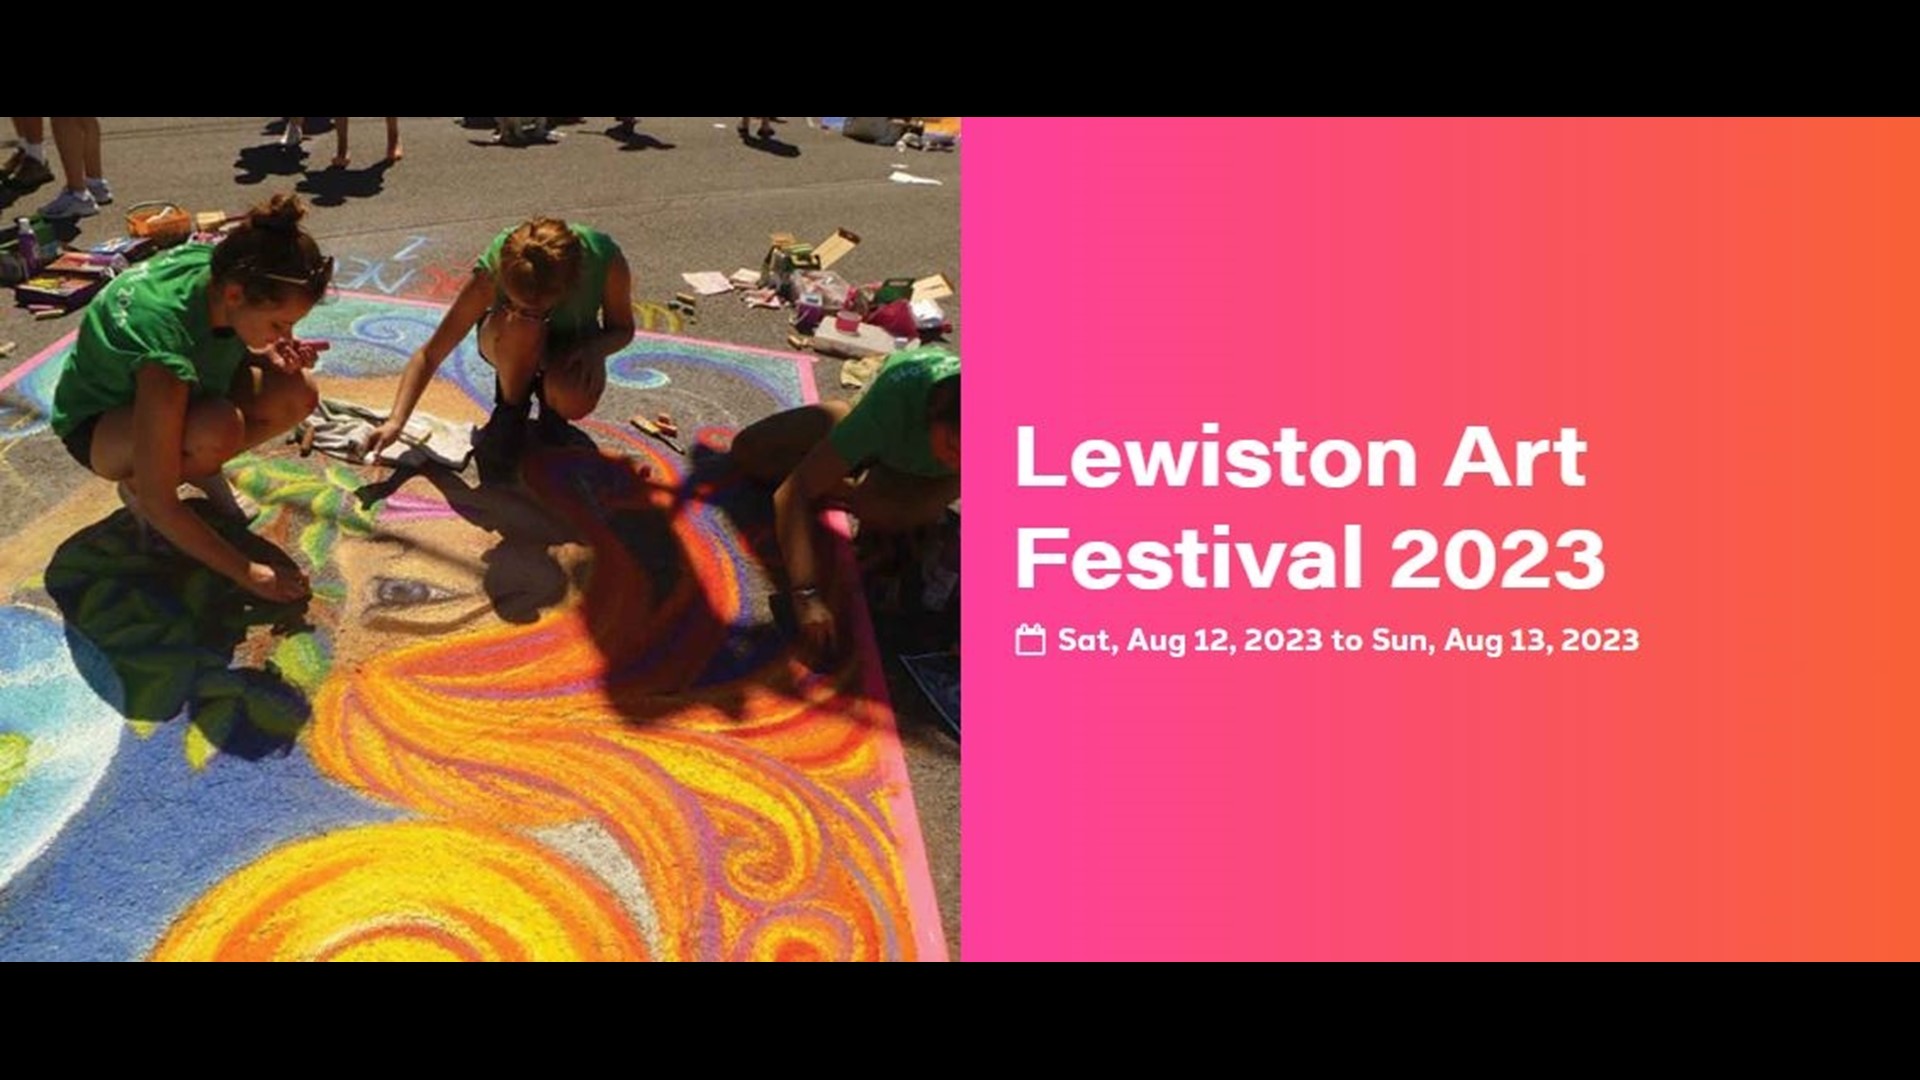 Lewiston Art Festival returns